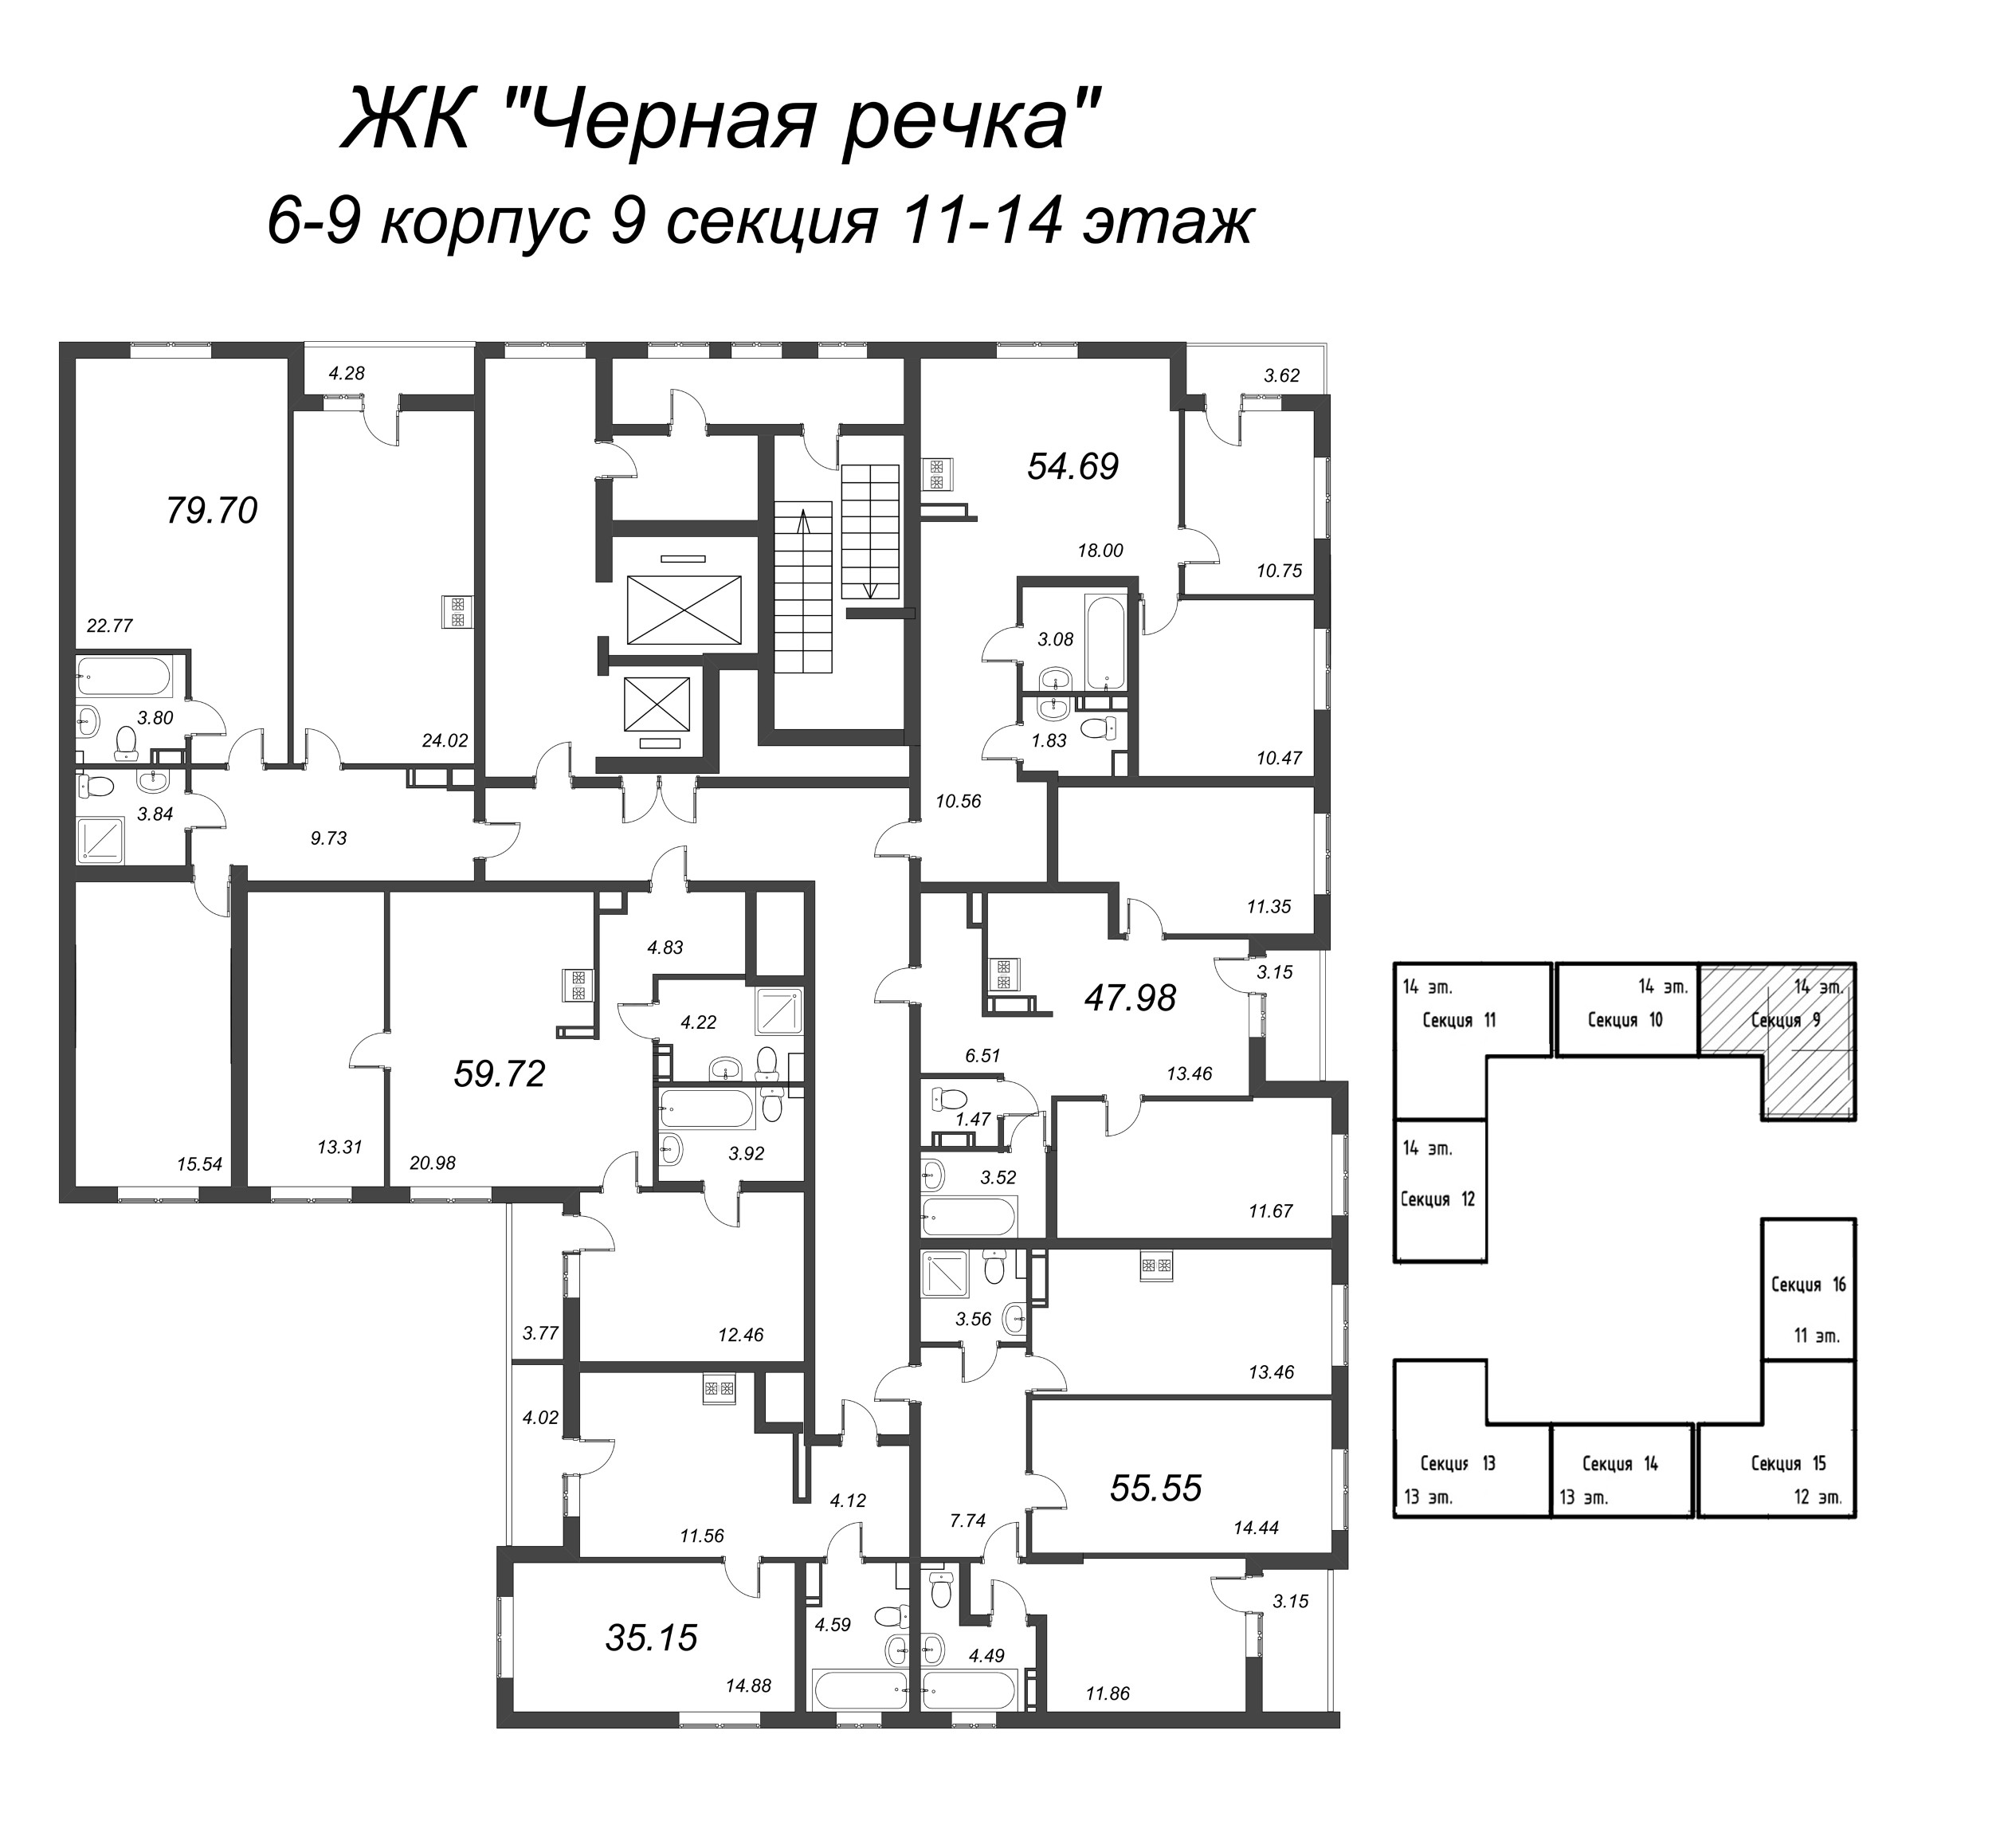 3-комнатная (Евро) квартира, 56.03 м² - планировка этажа